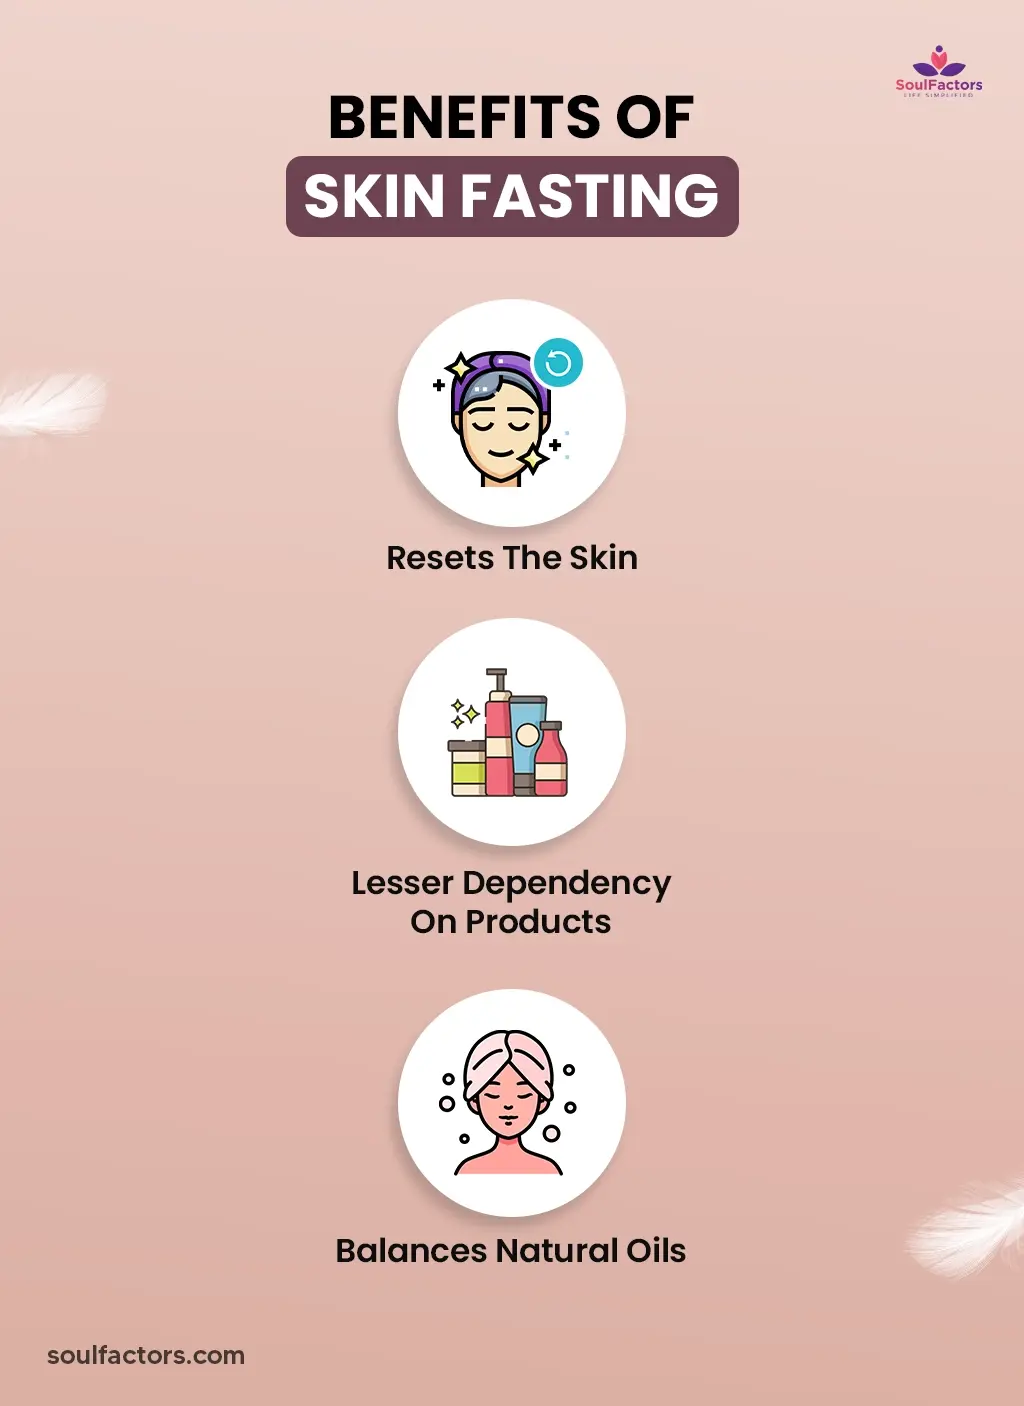 Skin Fasting Benefits